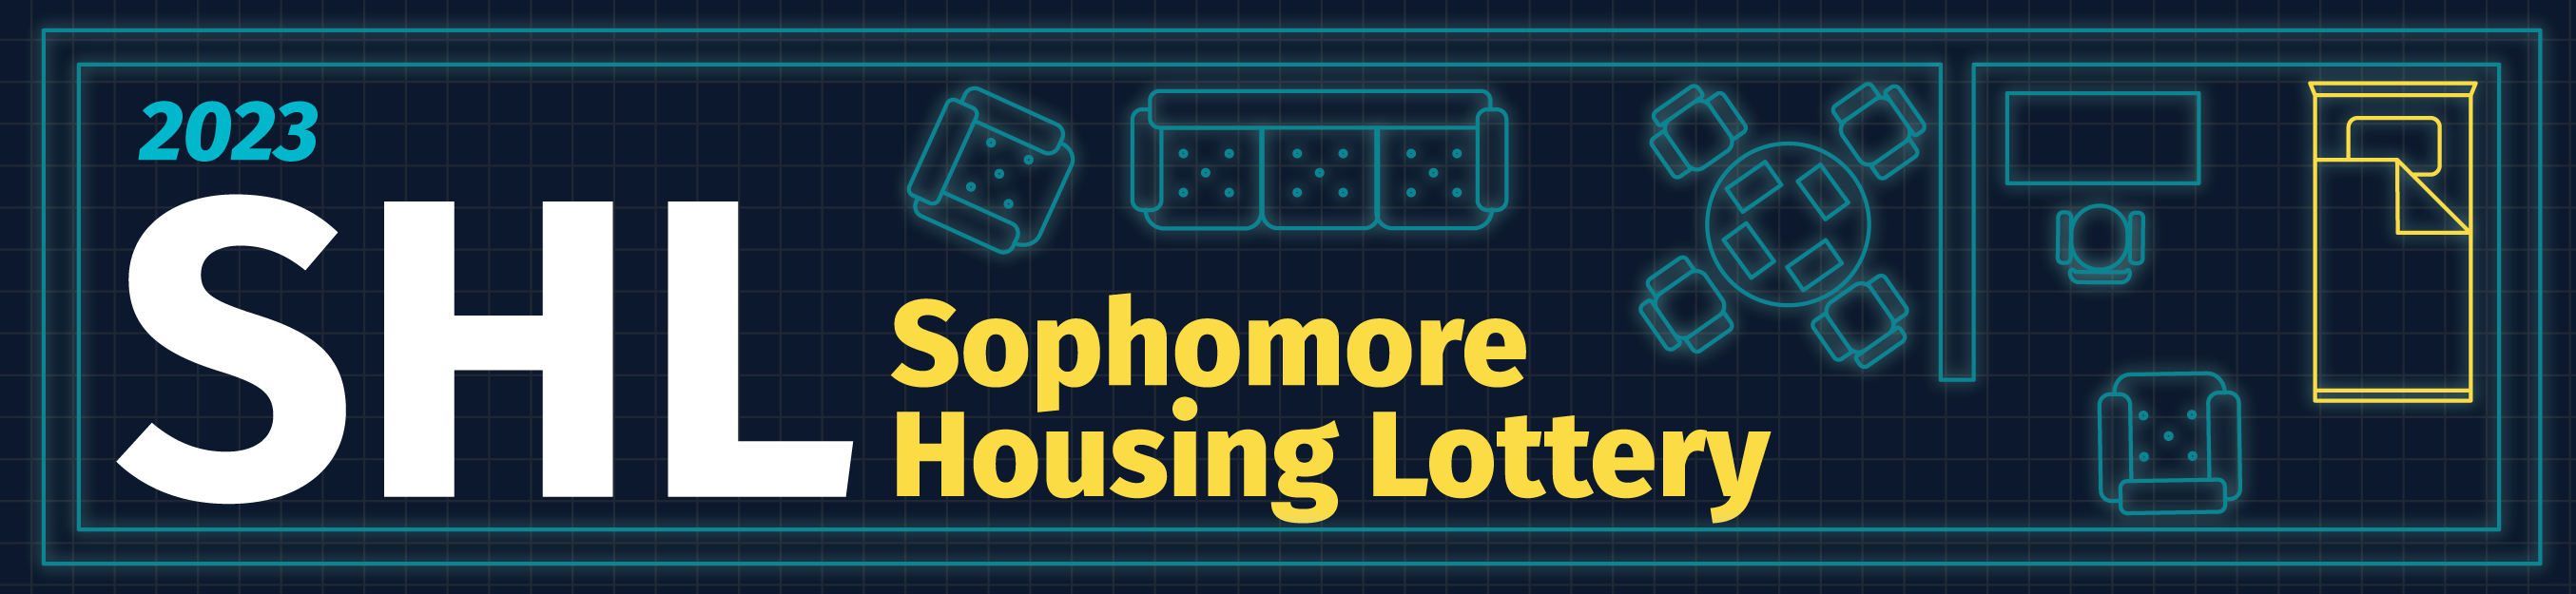 sophmore housing lottery banner